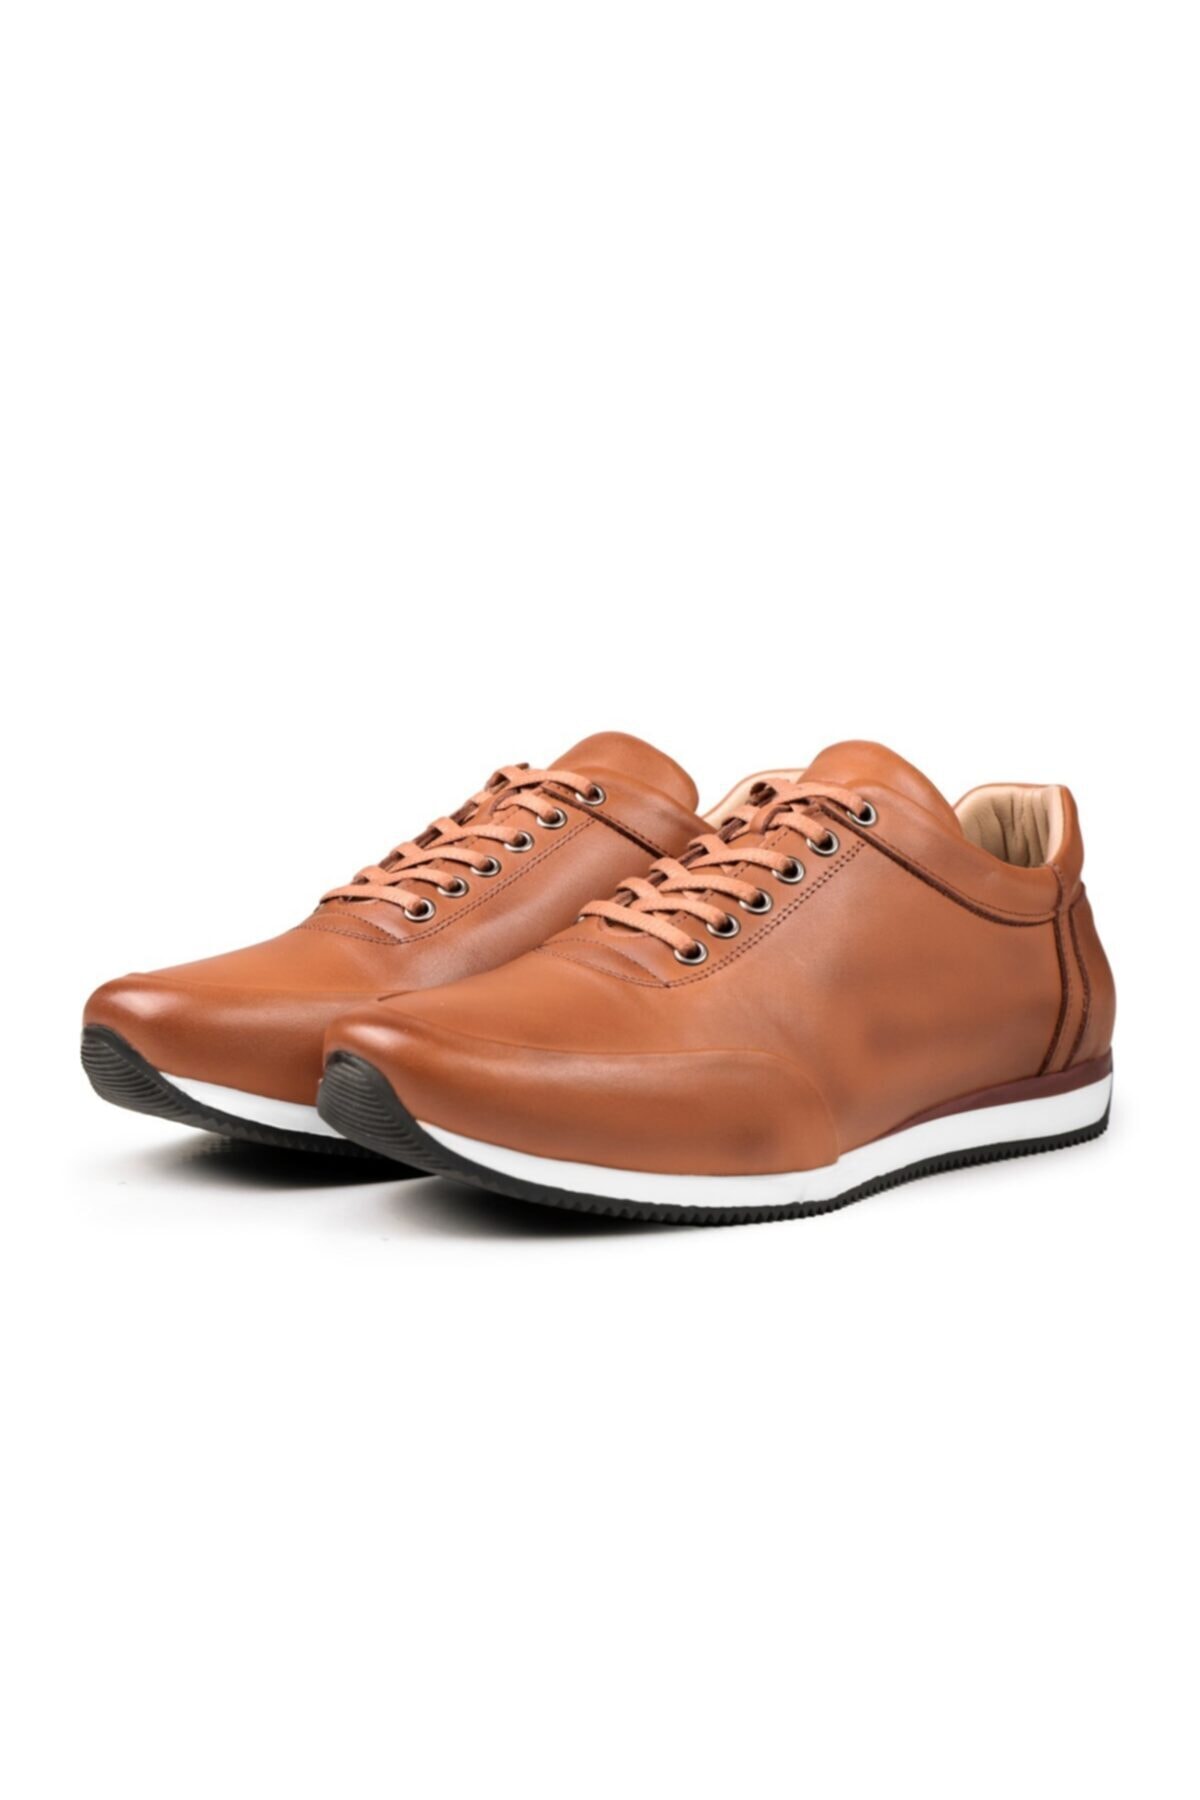 Ducavelli Comfy Genuine Leather Men's Casual Shoes, Casual Shoes, 100% Leather Shoes, All Seasons.